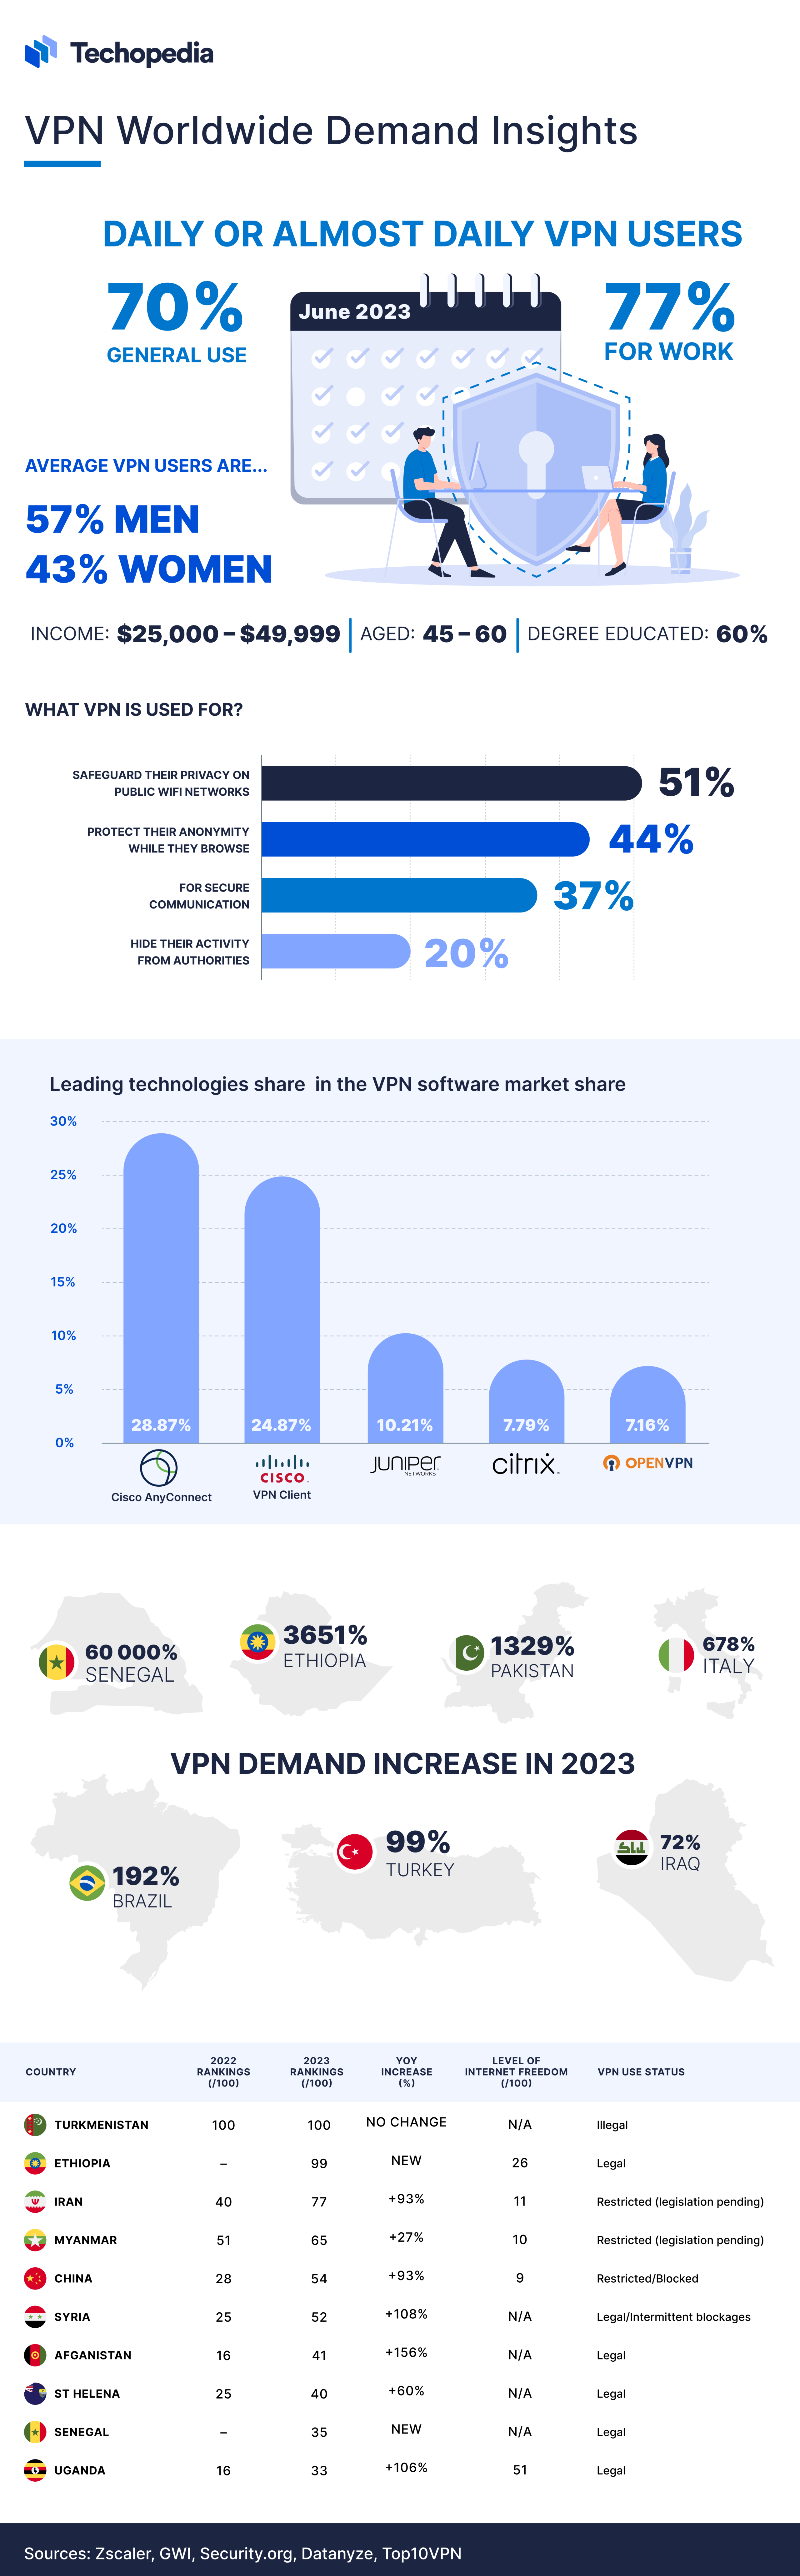 VPN worldwide demand statistics infographic - Techopedia